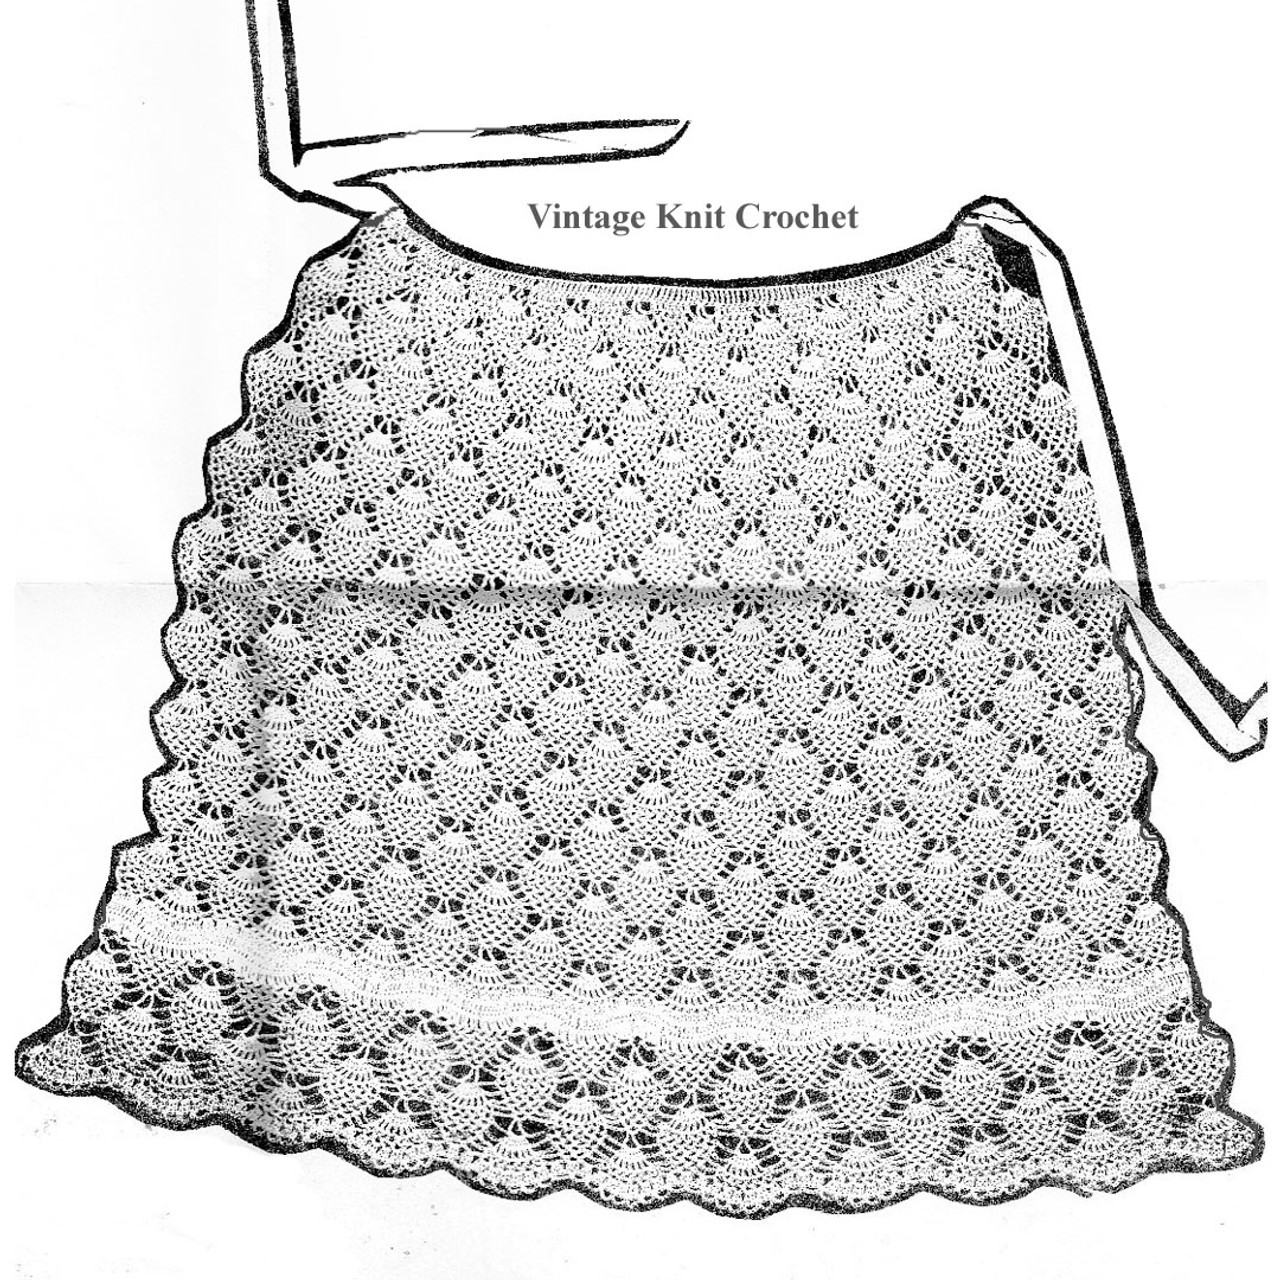 Pineapple crocheted apron pattern illustration